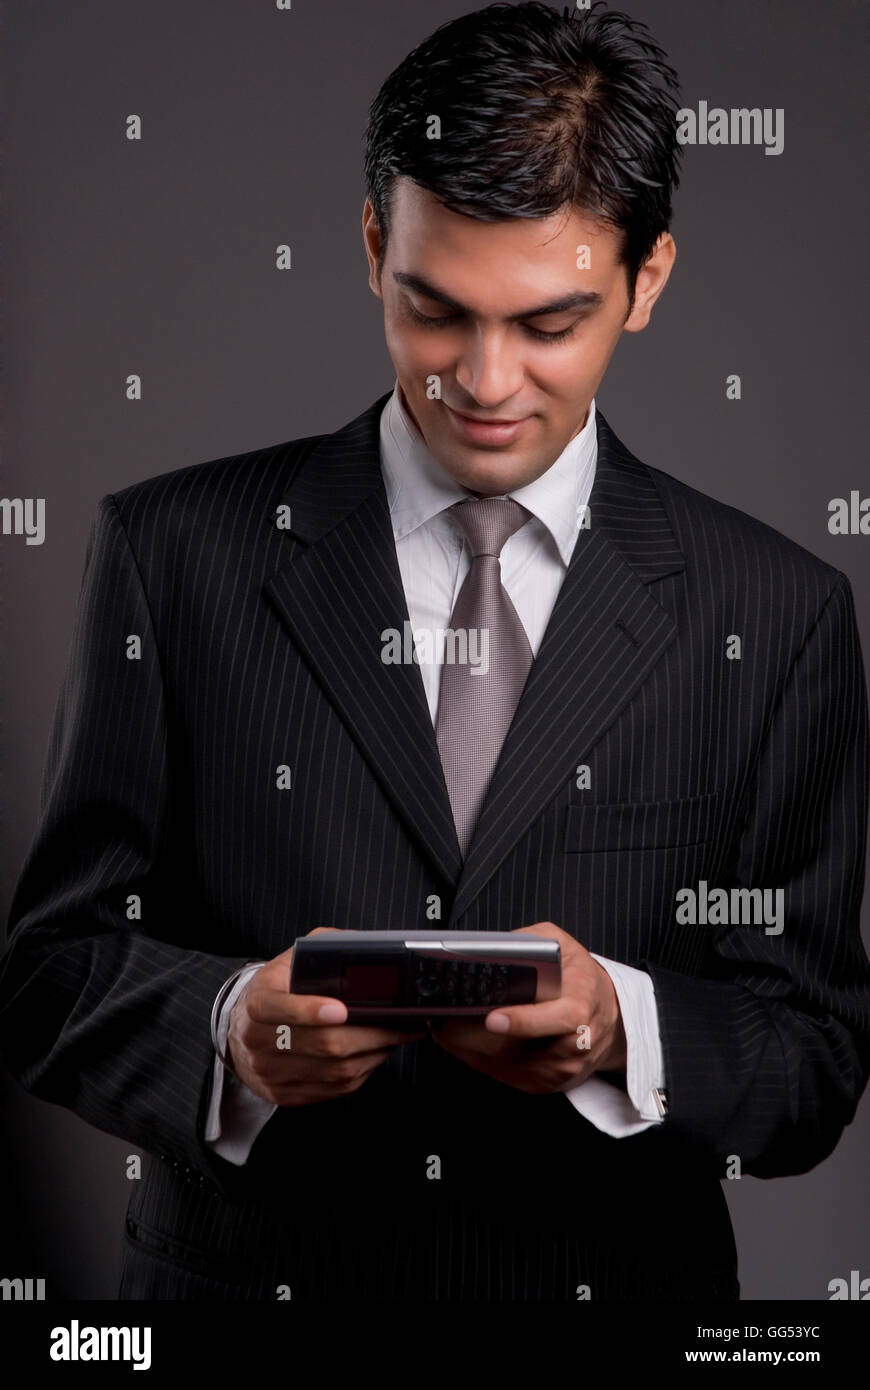 Businessman holding a communicator Stock Photo